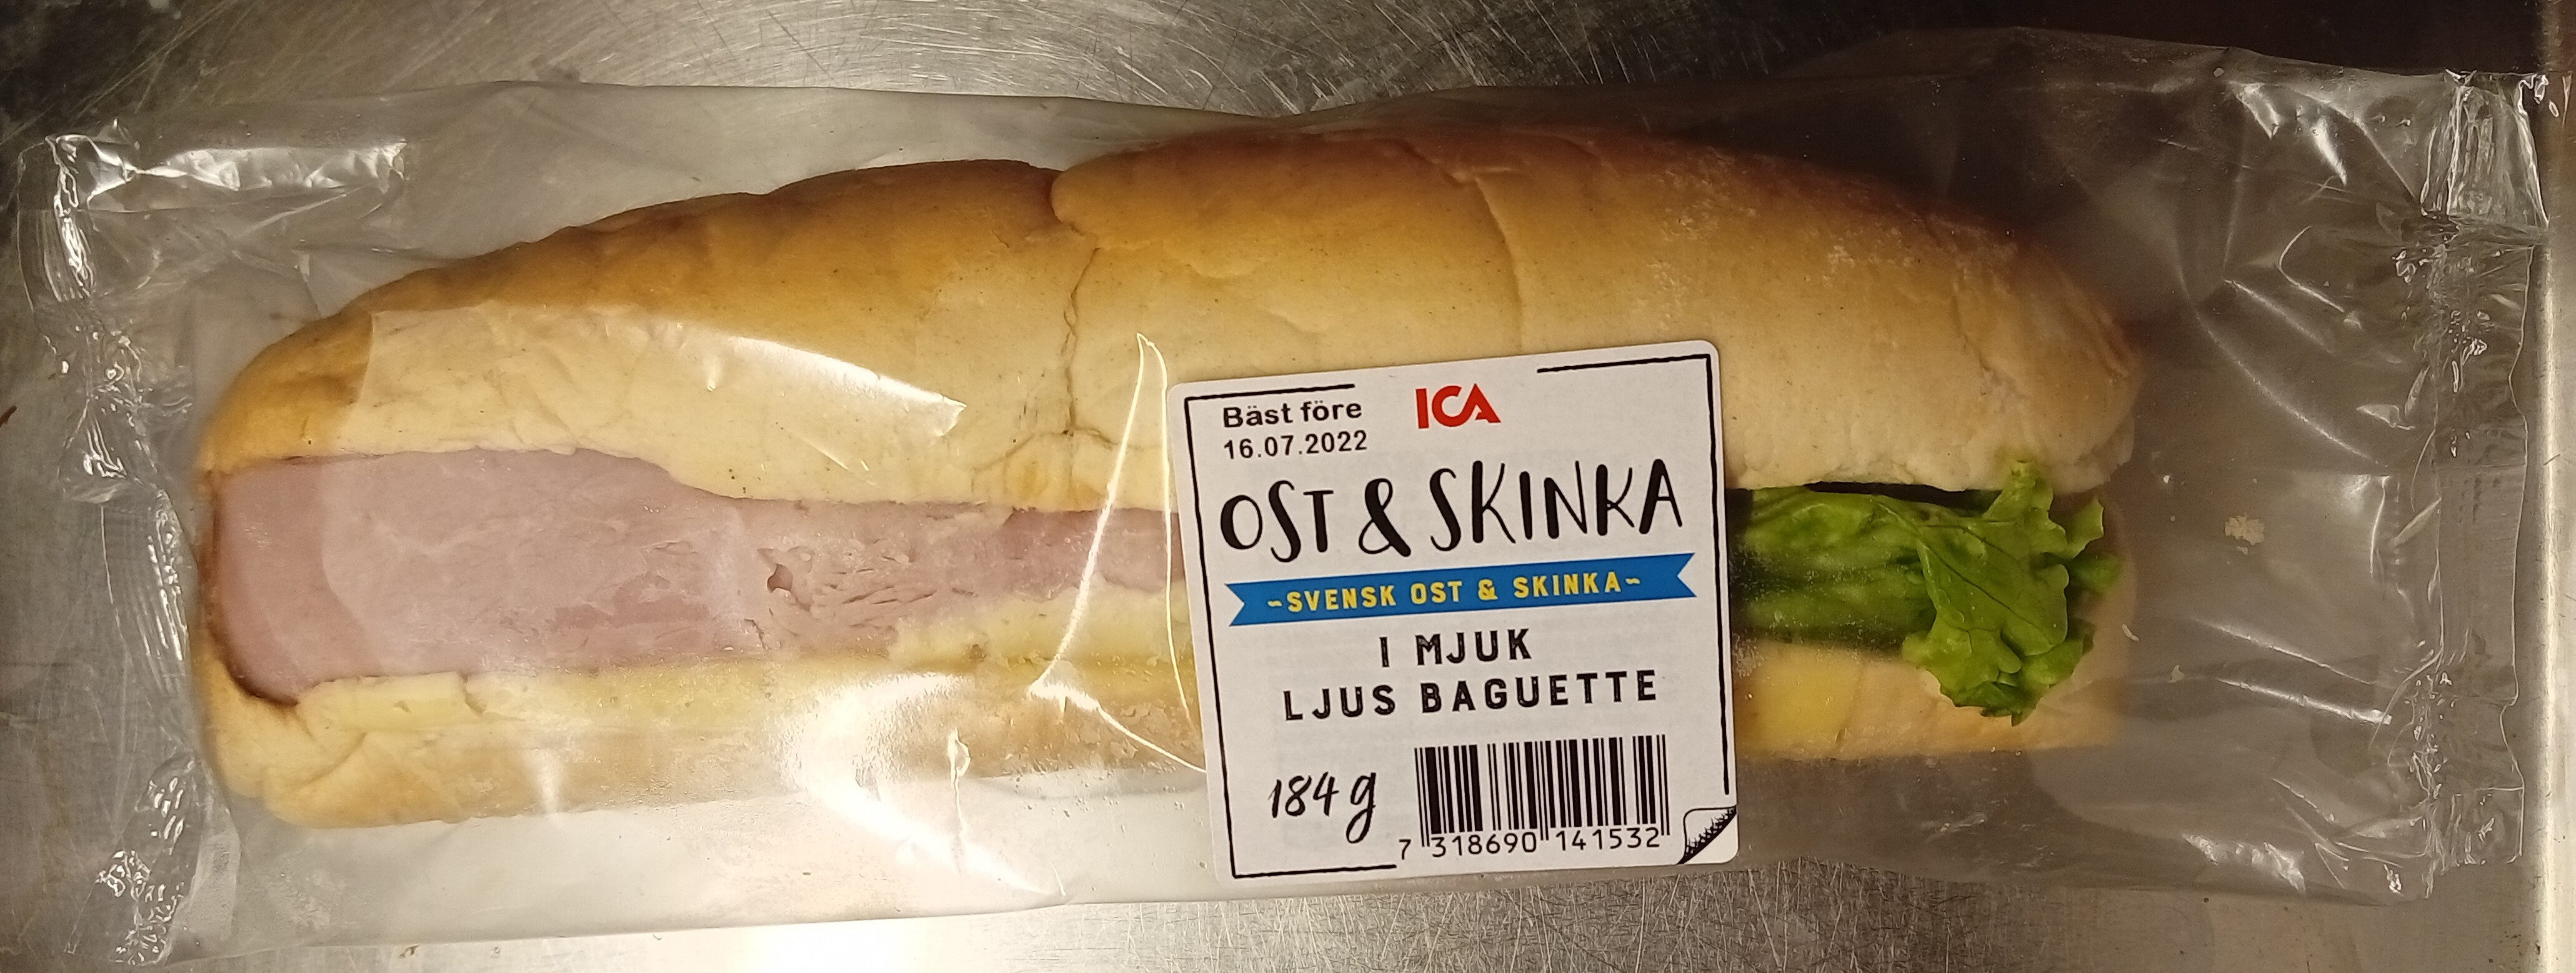 ICA Ost & skinka i mjuk ljus baguette - Produkt